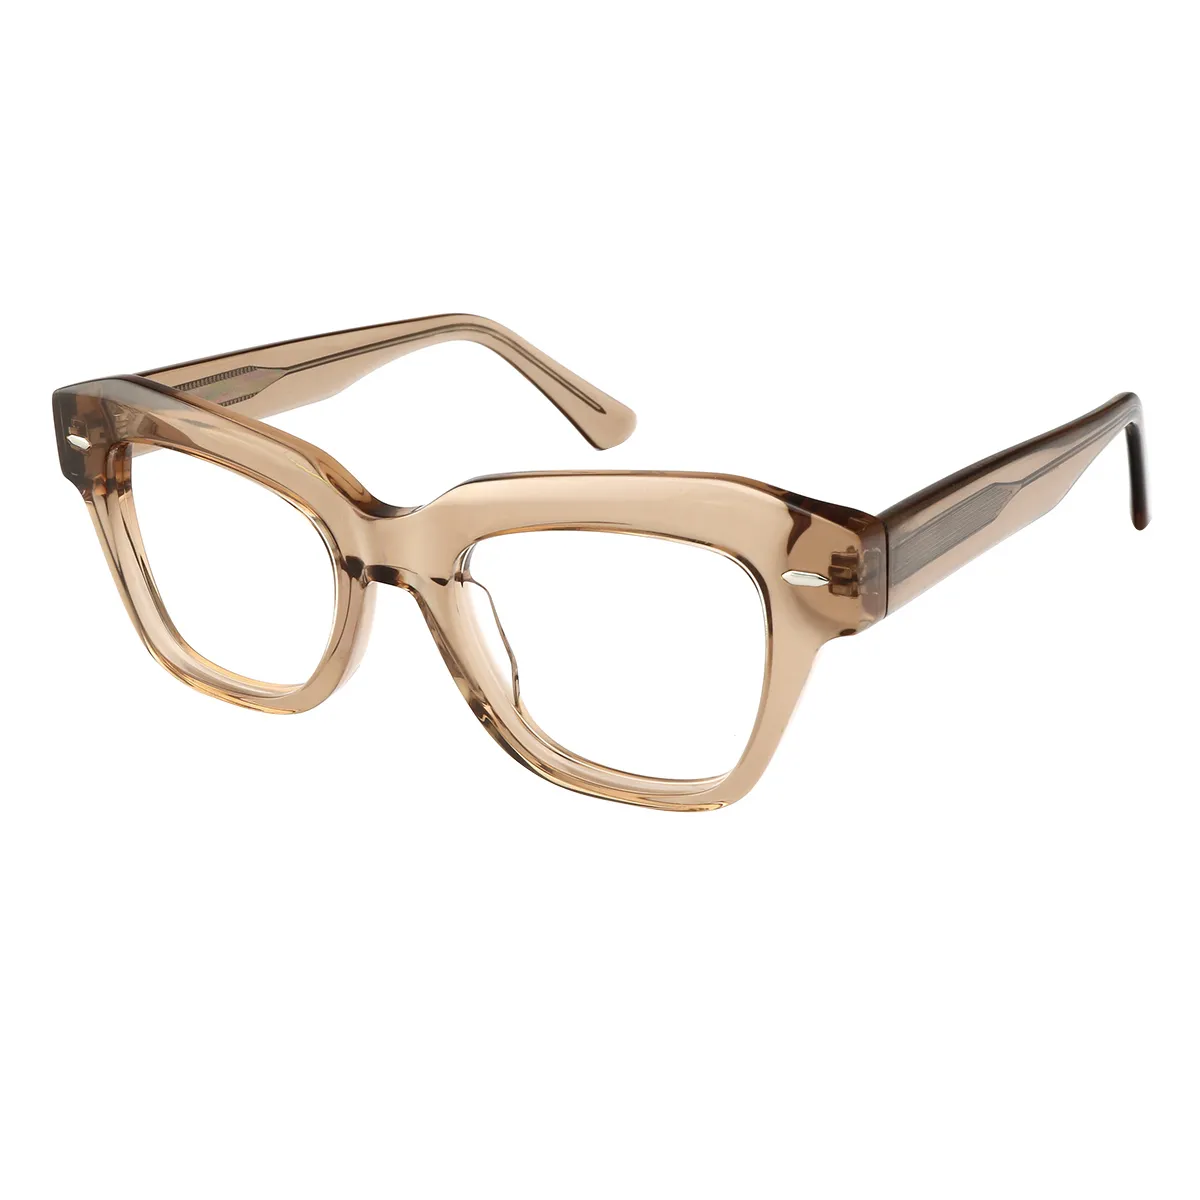 Myrtle - Square  Glasses for Men & Women